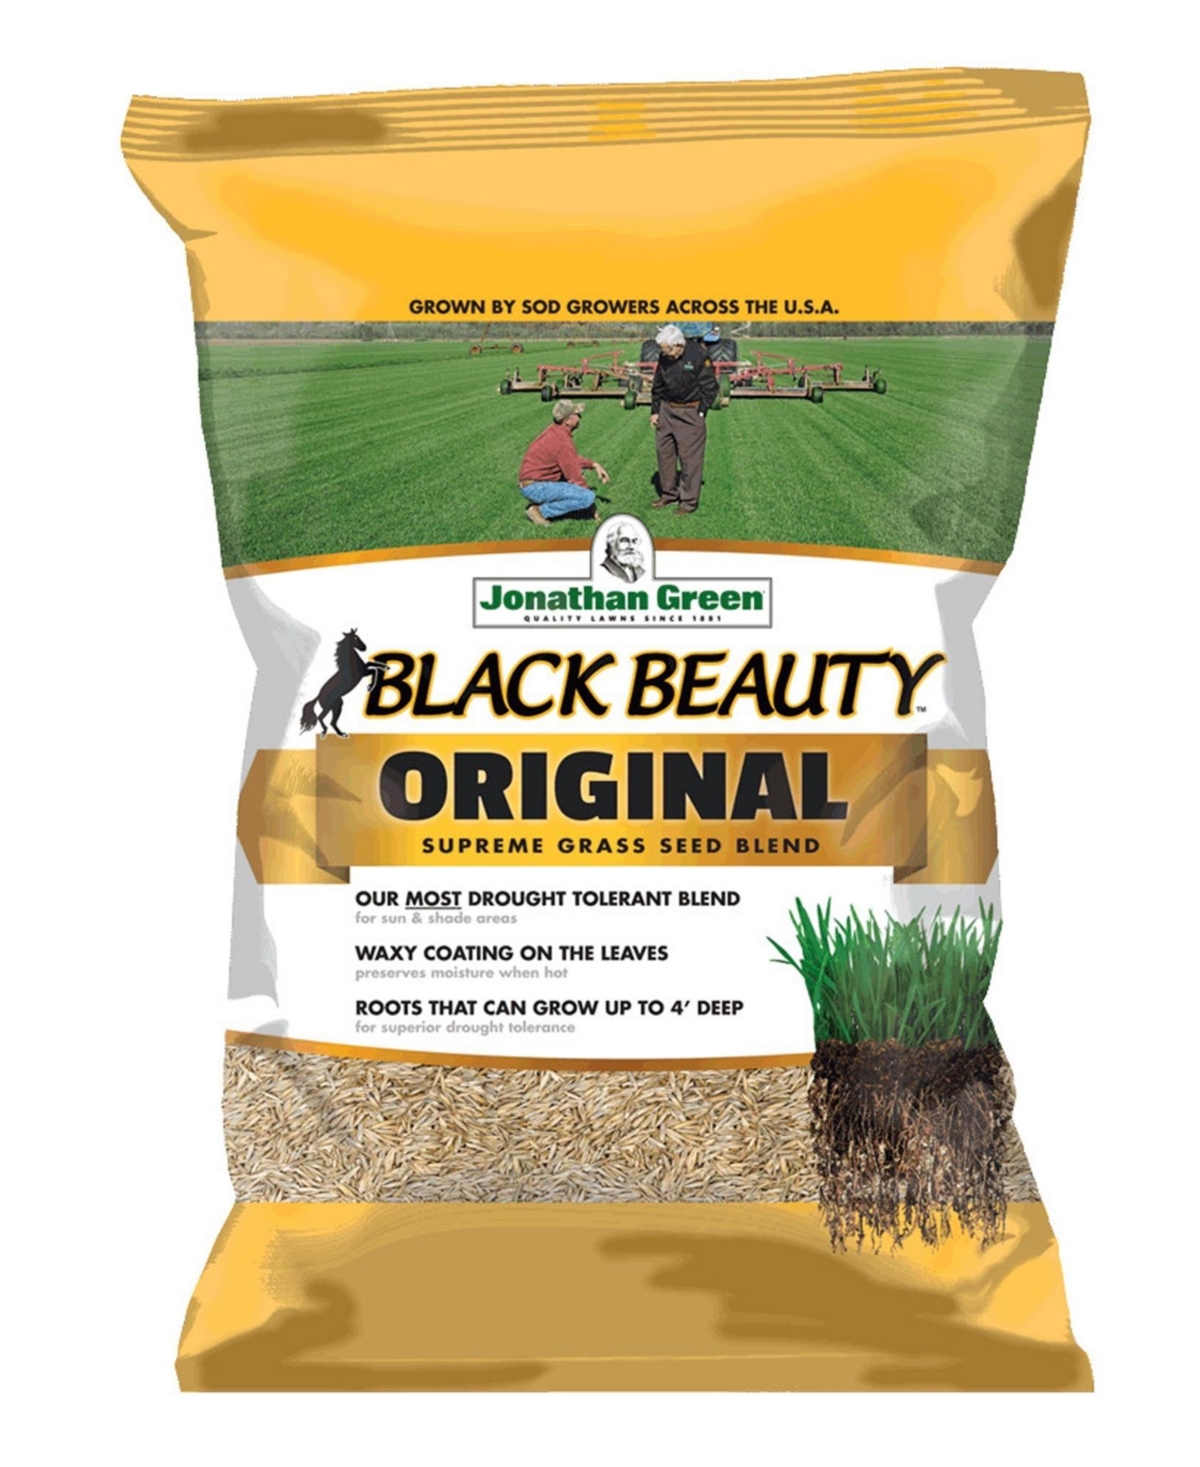 (#10315) Black Beauty Original Grass Seed, 25 lb bag - Brown